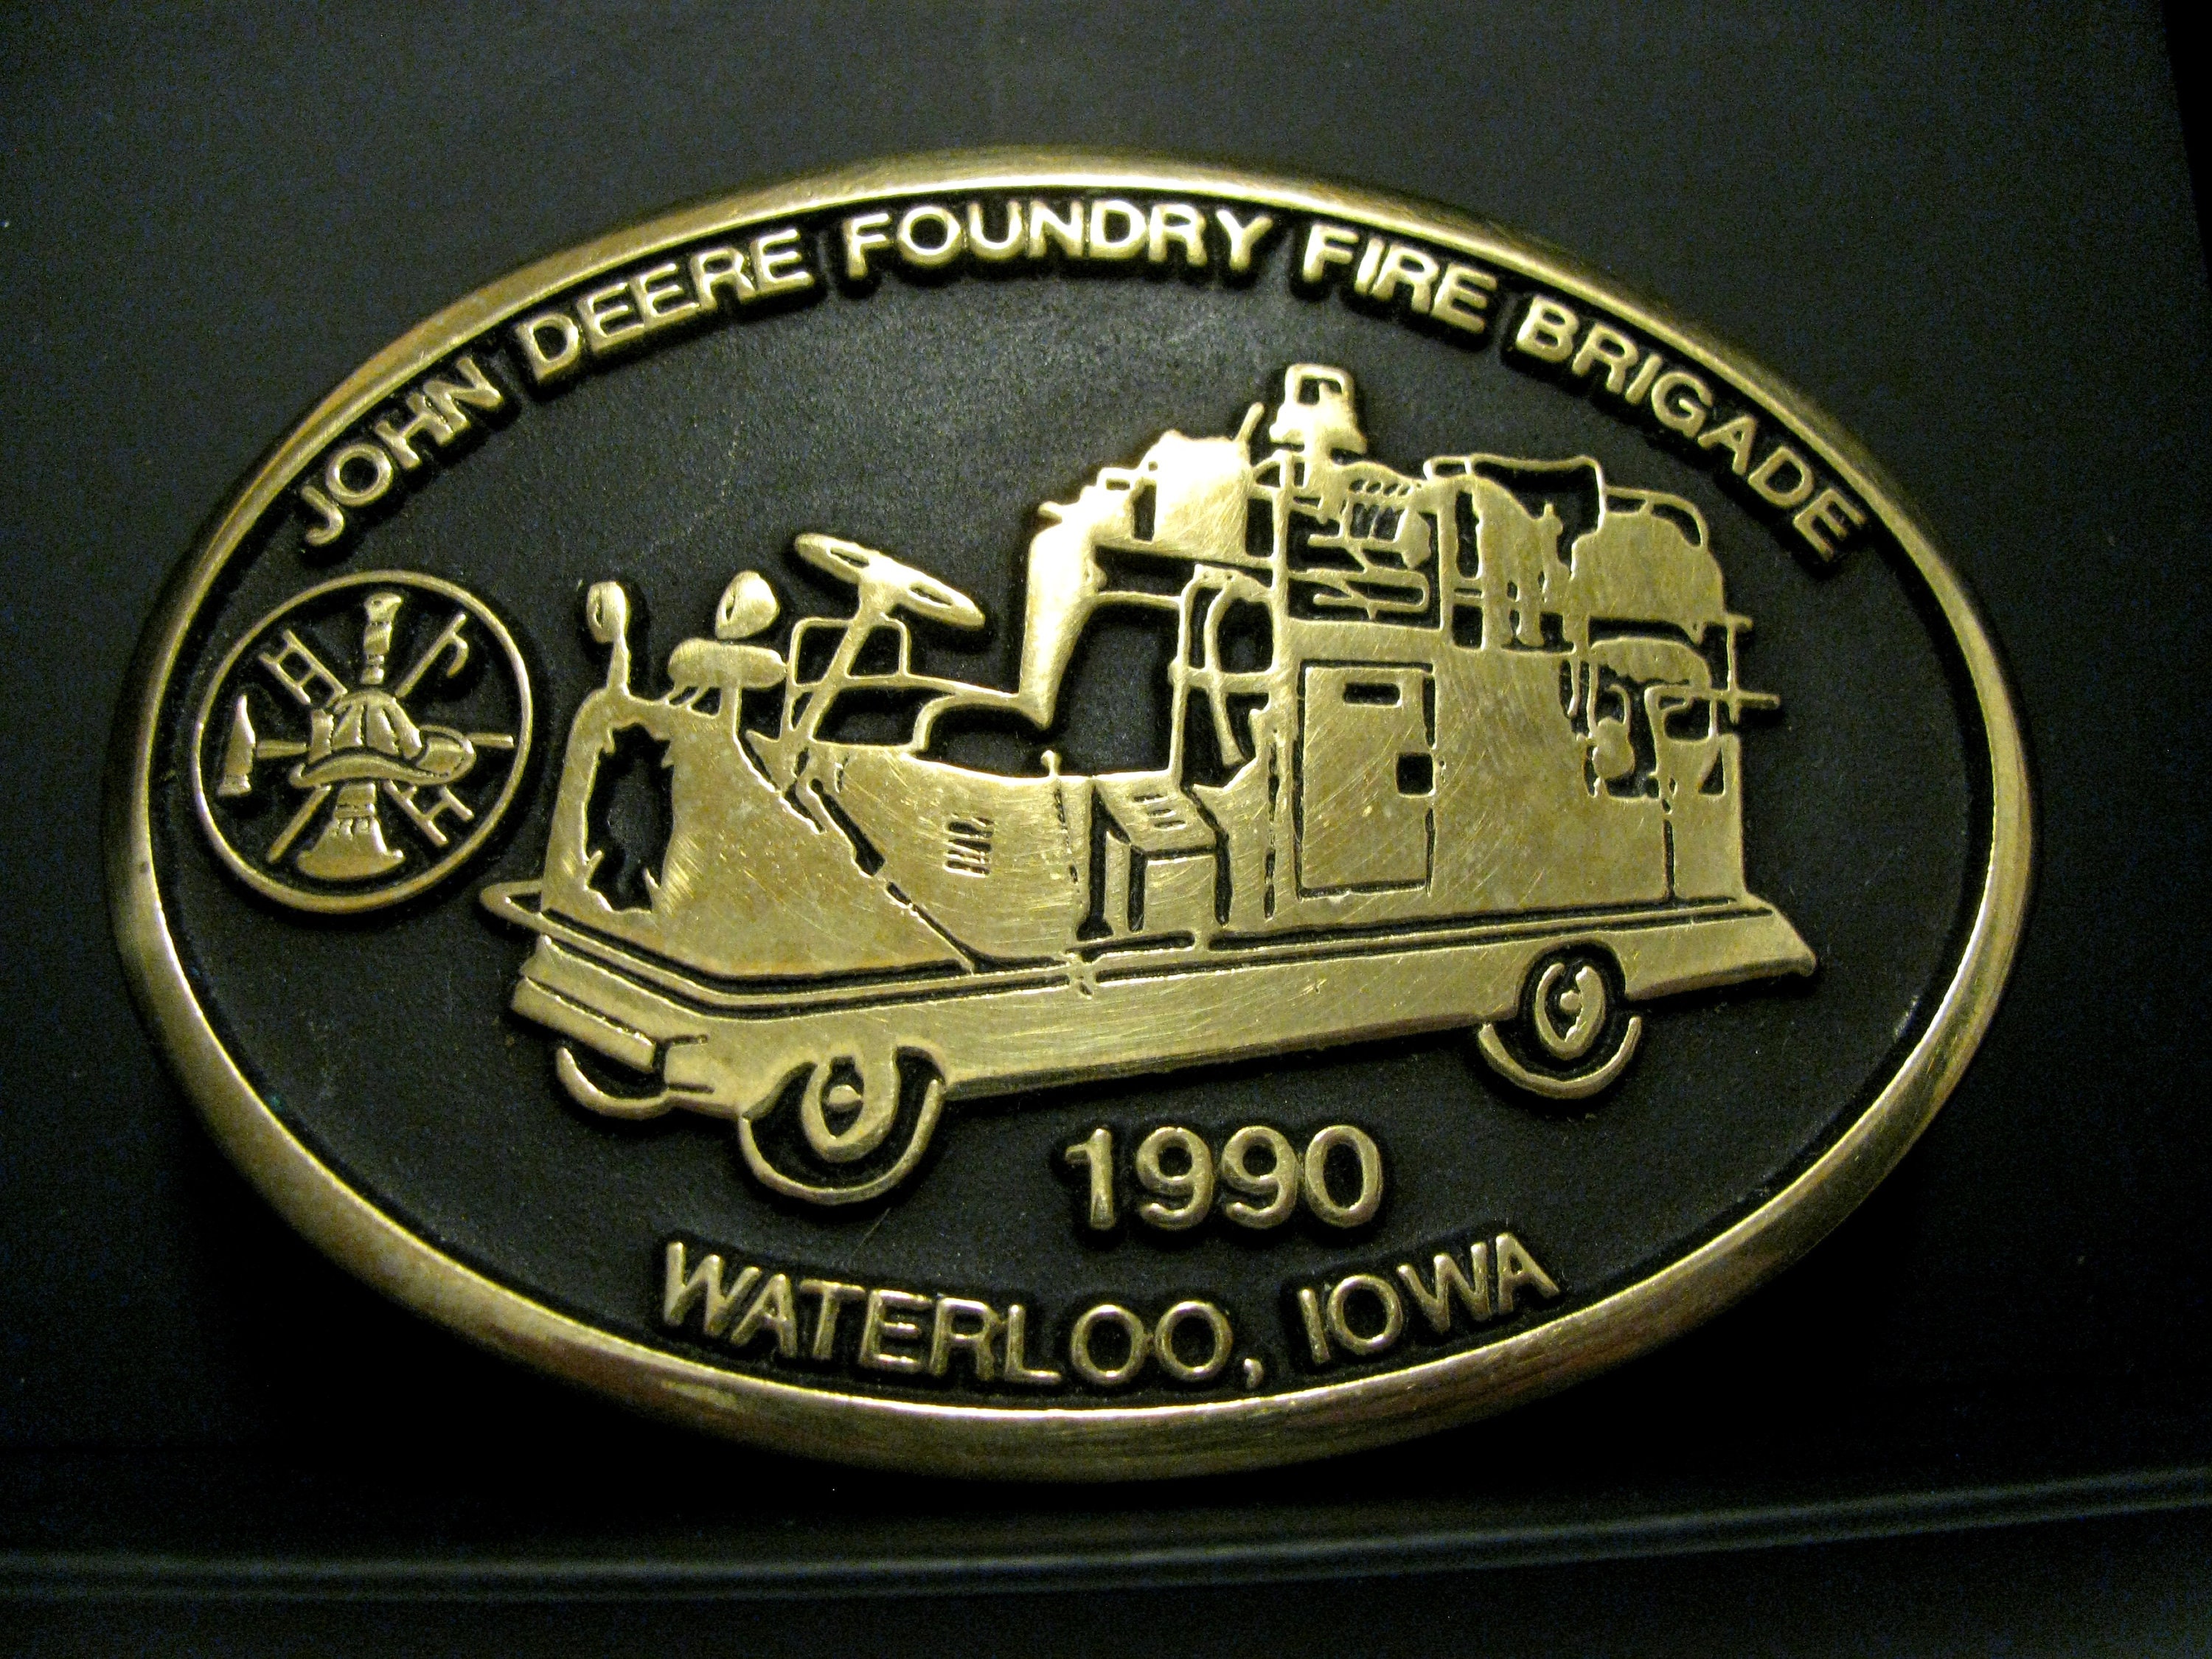 John Deere Waterloo Foundry FIRE BRIGADE EMPLOYEE Service Award 1990 ...